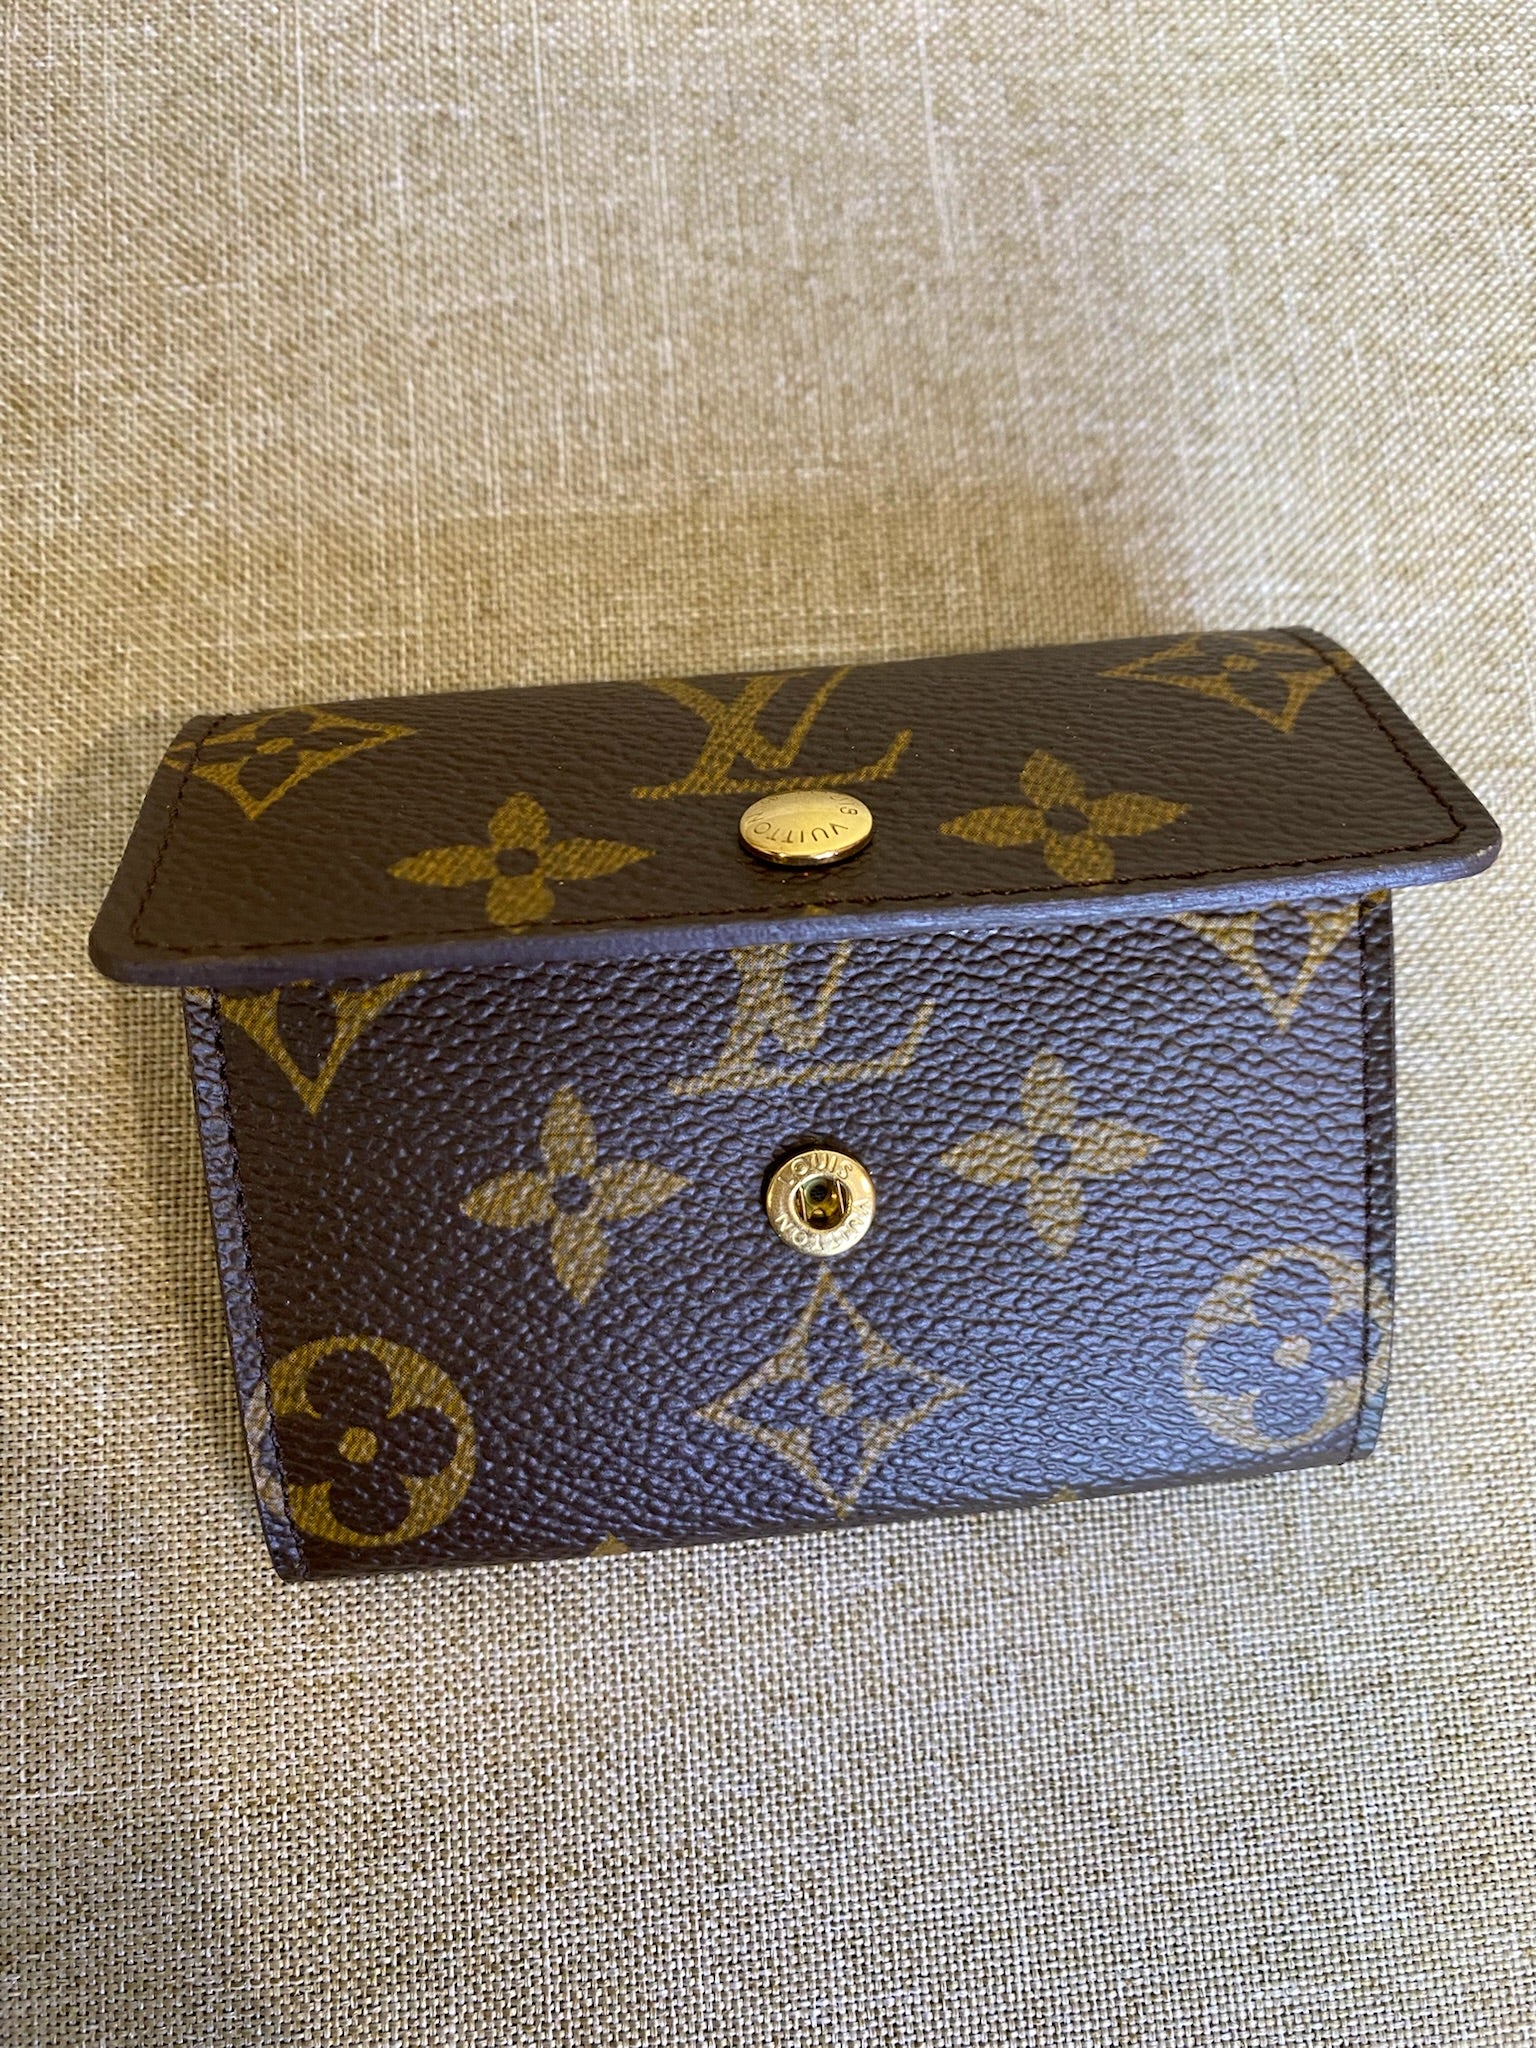 Louis Vuitton Vintage LV Monogram Elise Wallet